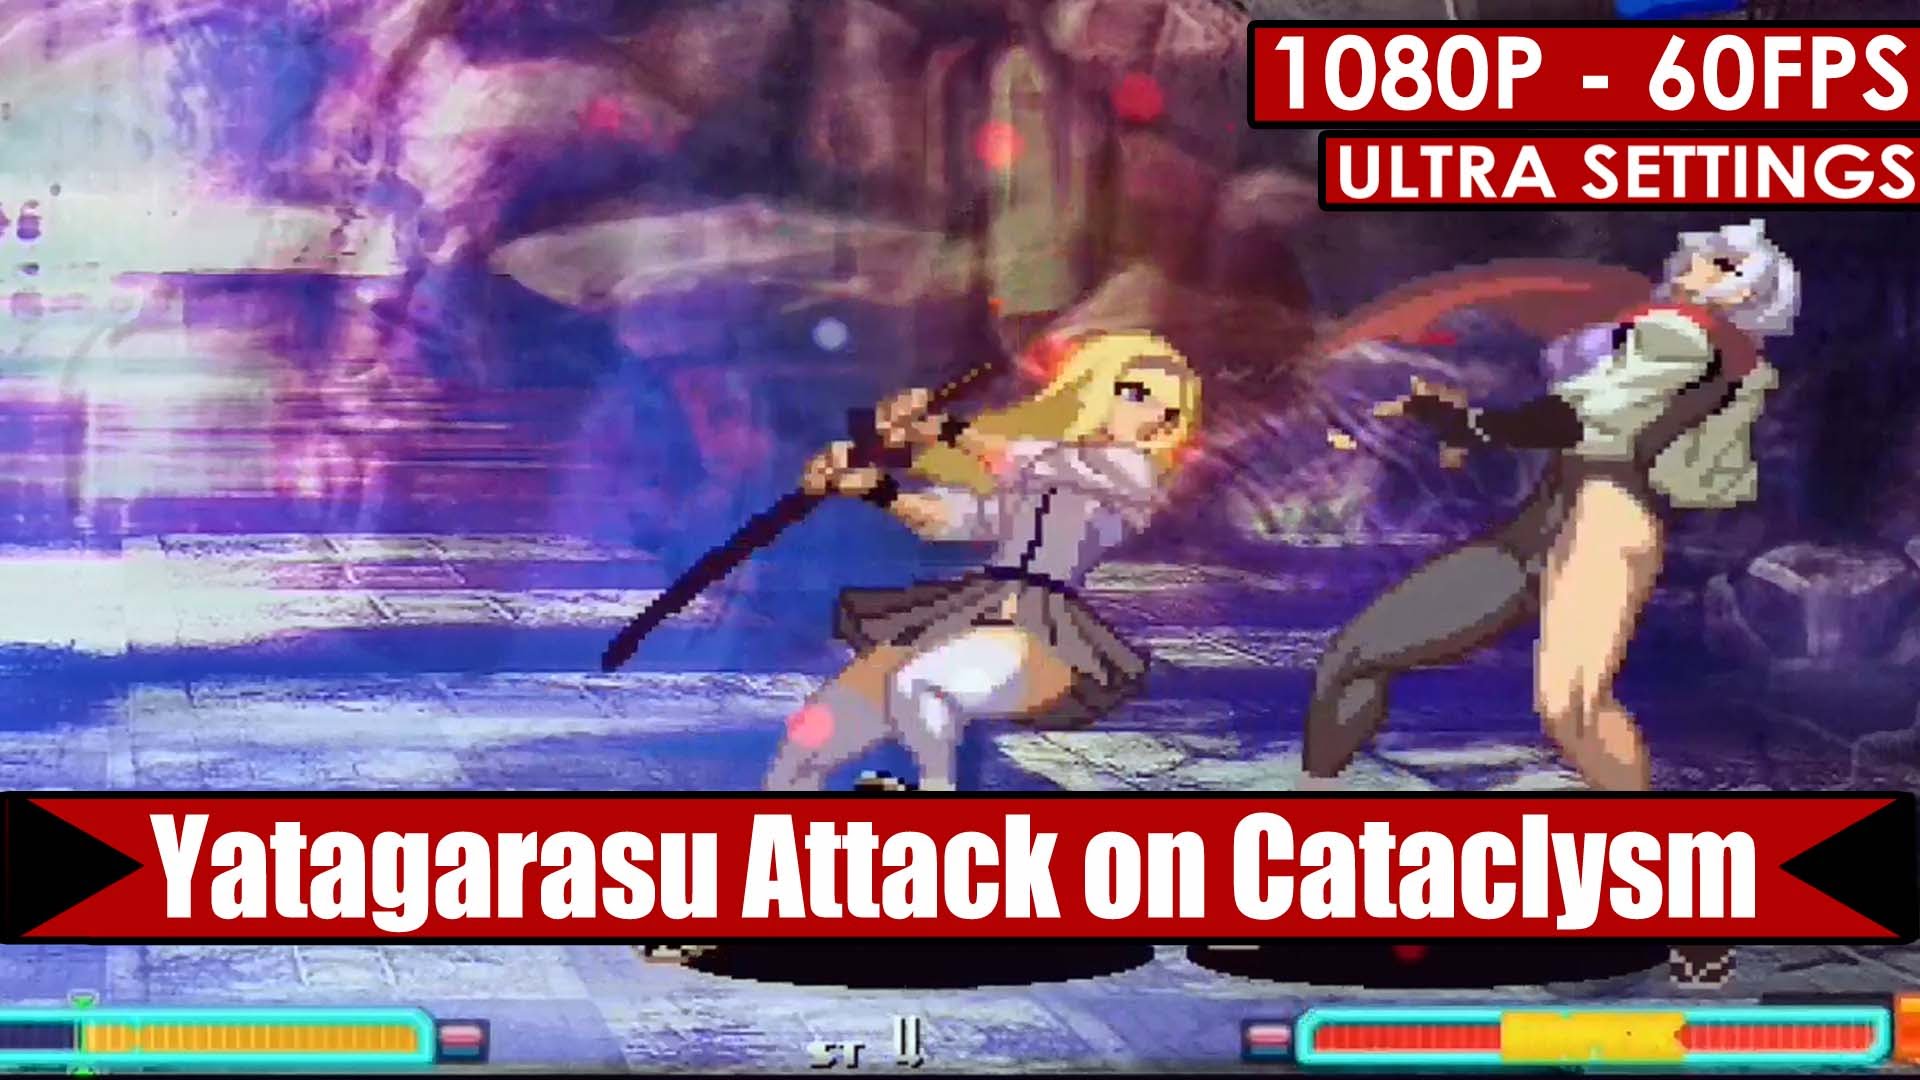 Yatagarasu Attack On Cataclysm HD wallpapers, Desktop wallpaper - most viewed